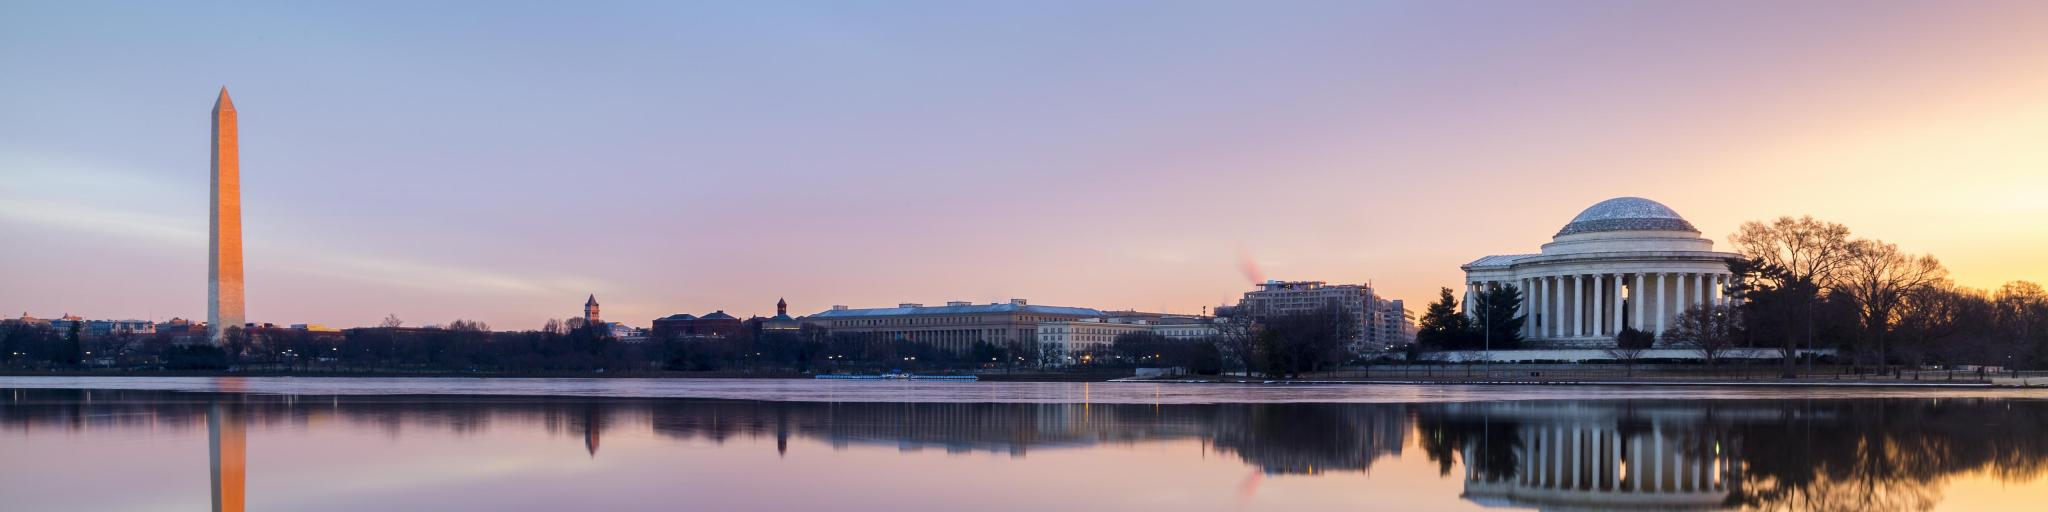 Washington DC, Washington, USA taken at the Washington Monument and Jefferson Memorial at sunrise.